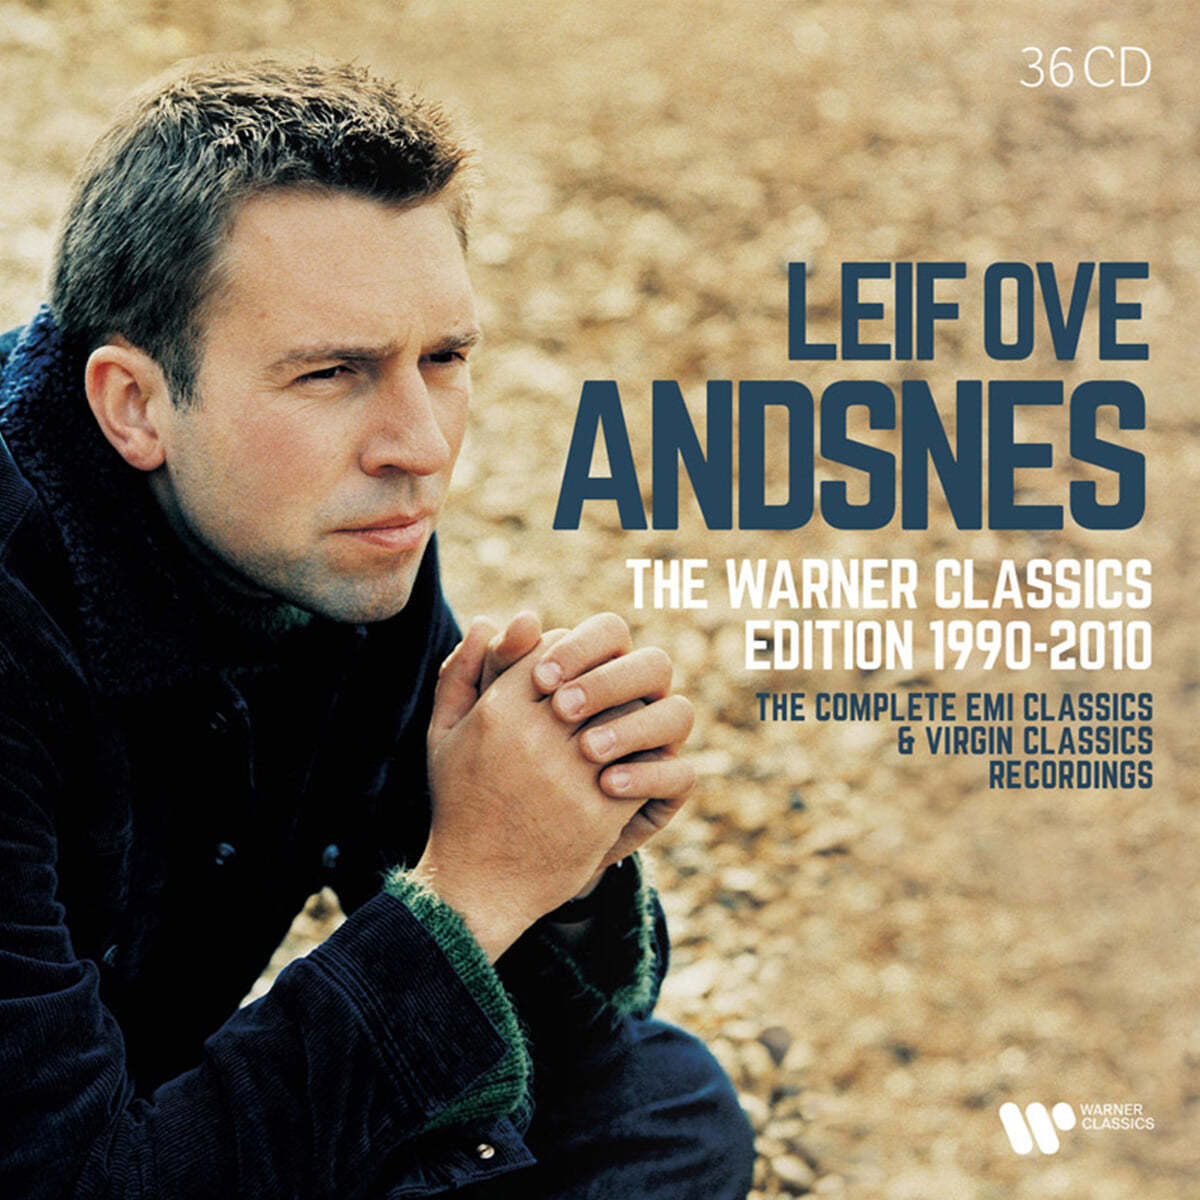 Leif Ove Andsnes 레이프 오베 안스네스 워너 녹음집 (The Warner Classics Edition 1990-2010)